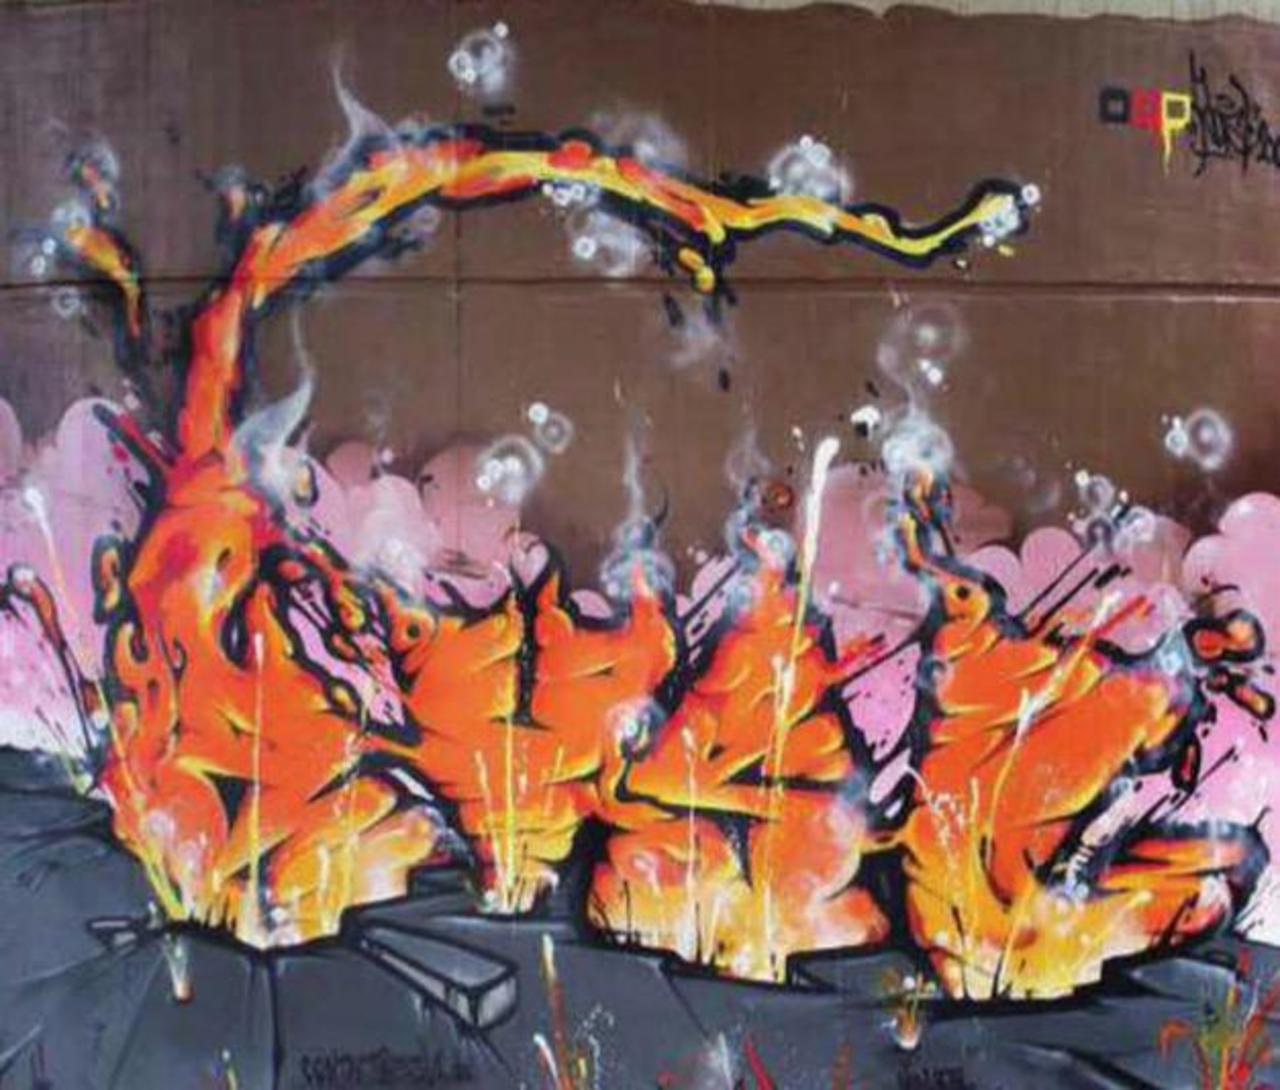 Sweet smokey "Rusl" #graffiti art via @ibombdat ... published on http://www.ibombdat.com/archives/3046 #streetart #rusl #ibombdat https://t.co/sp50bRFtCb